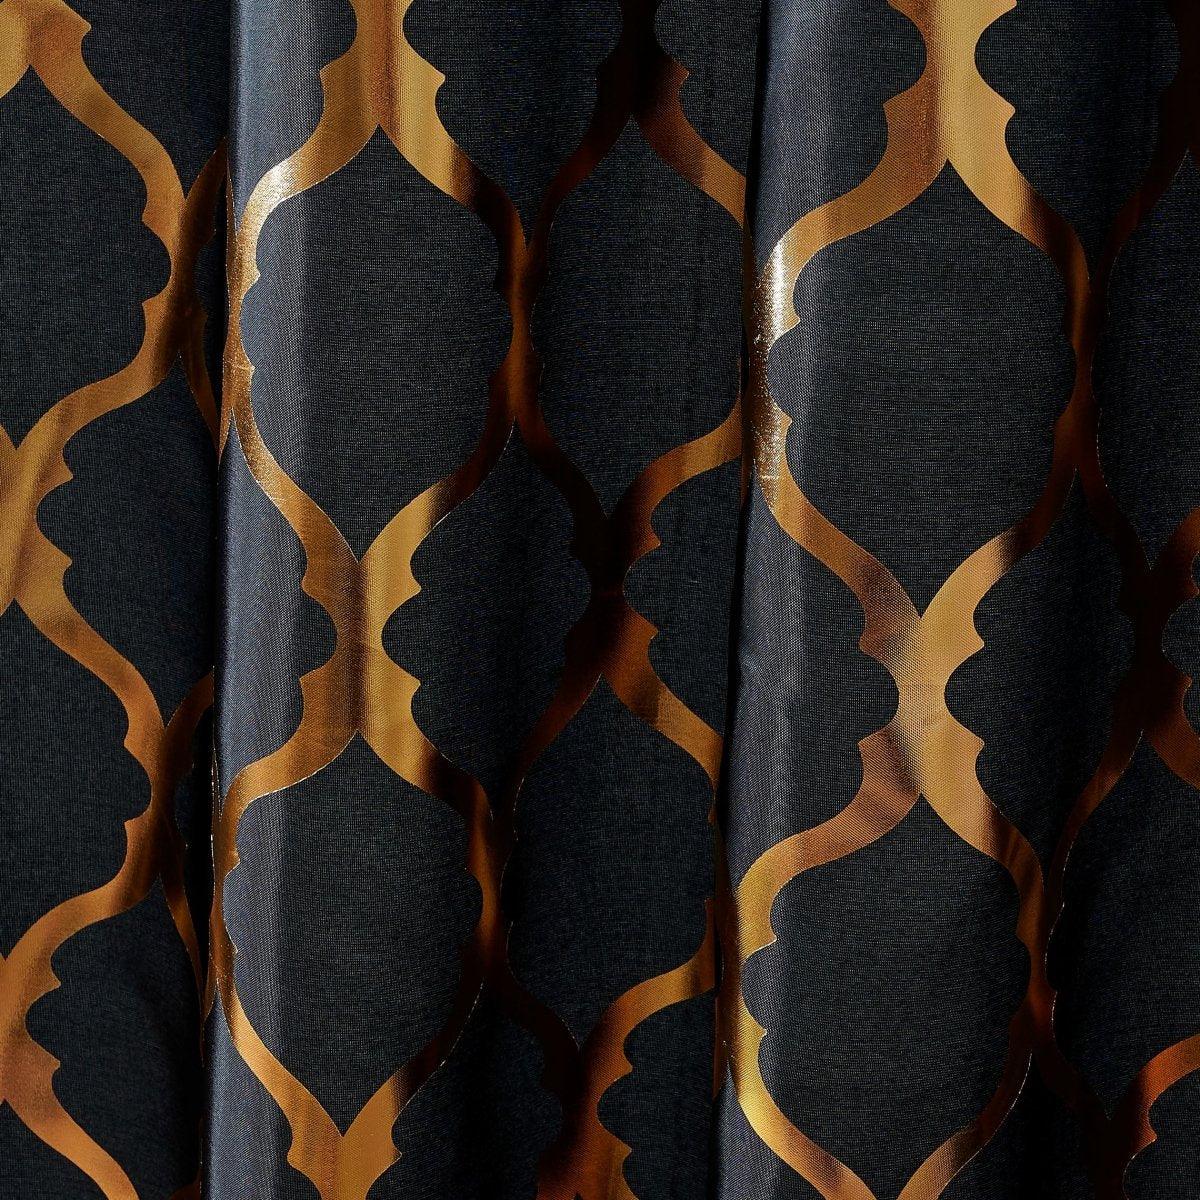 14pc Hooks with Rug Polyester Shower Curtain Set - Spirit Linen | Black